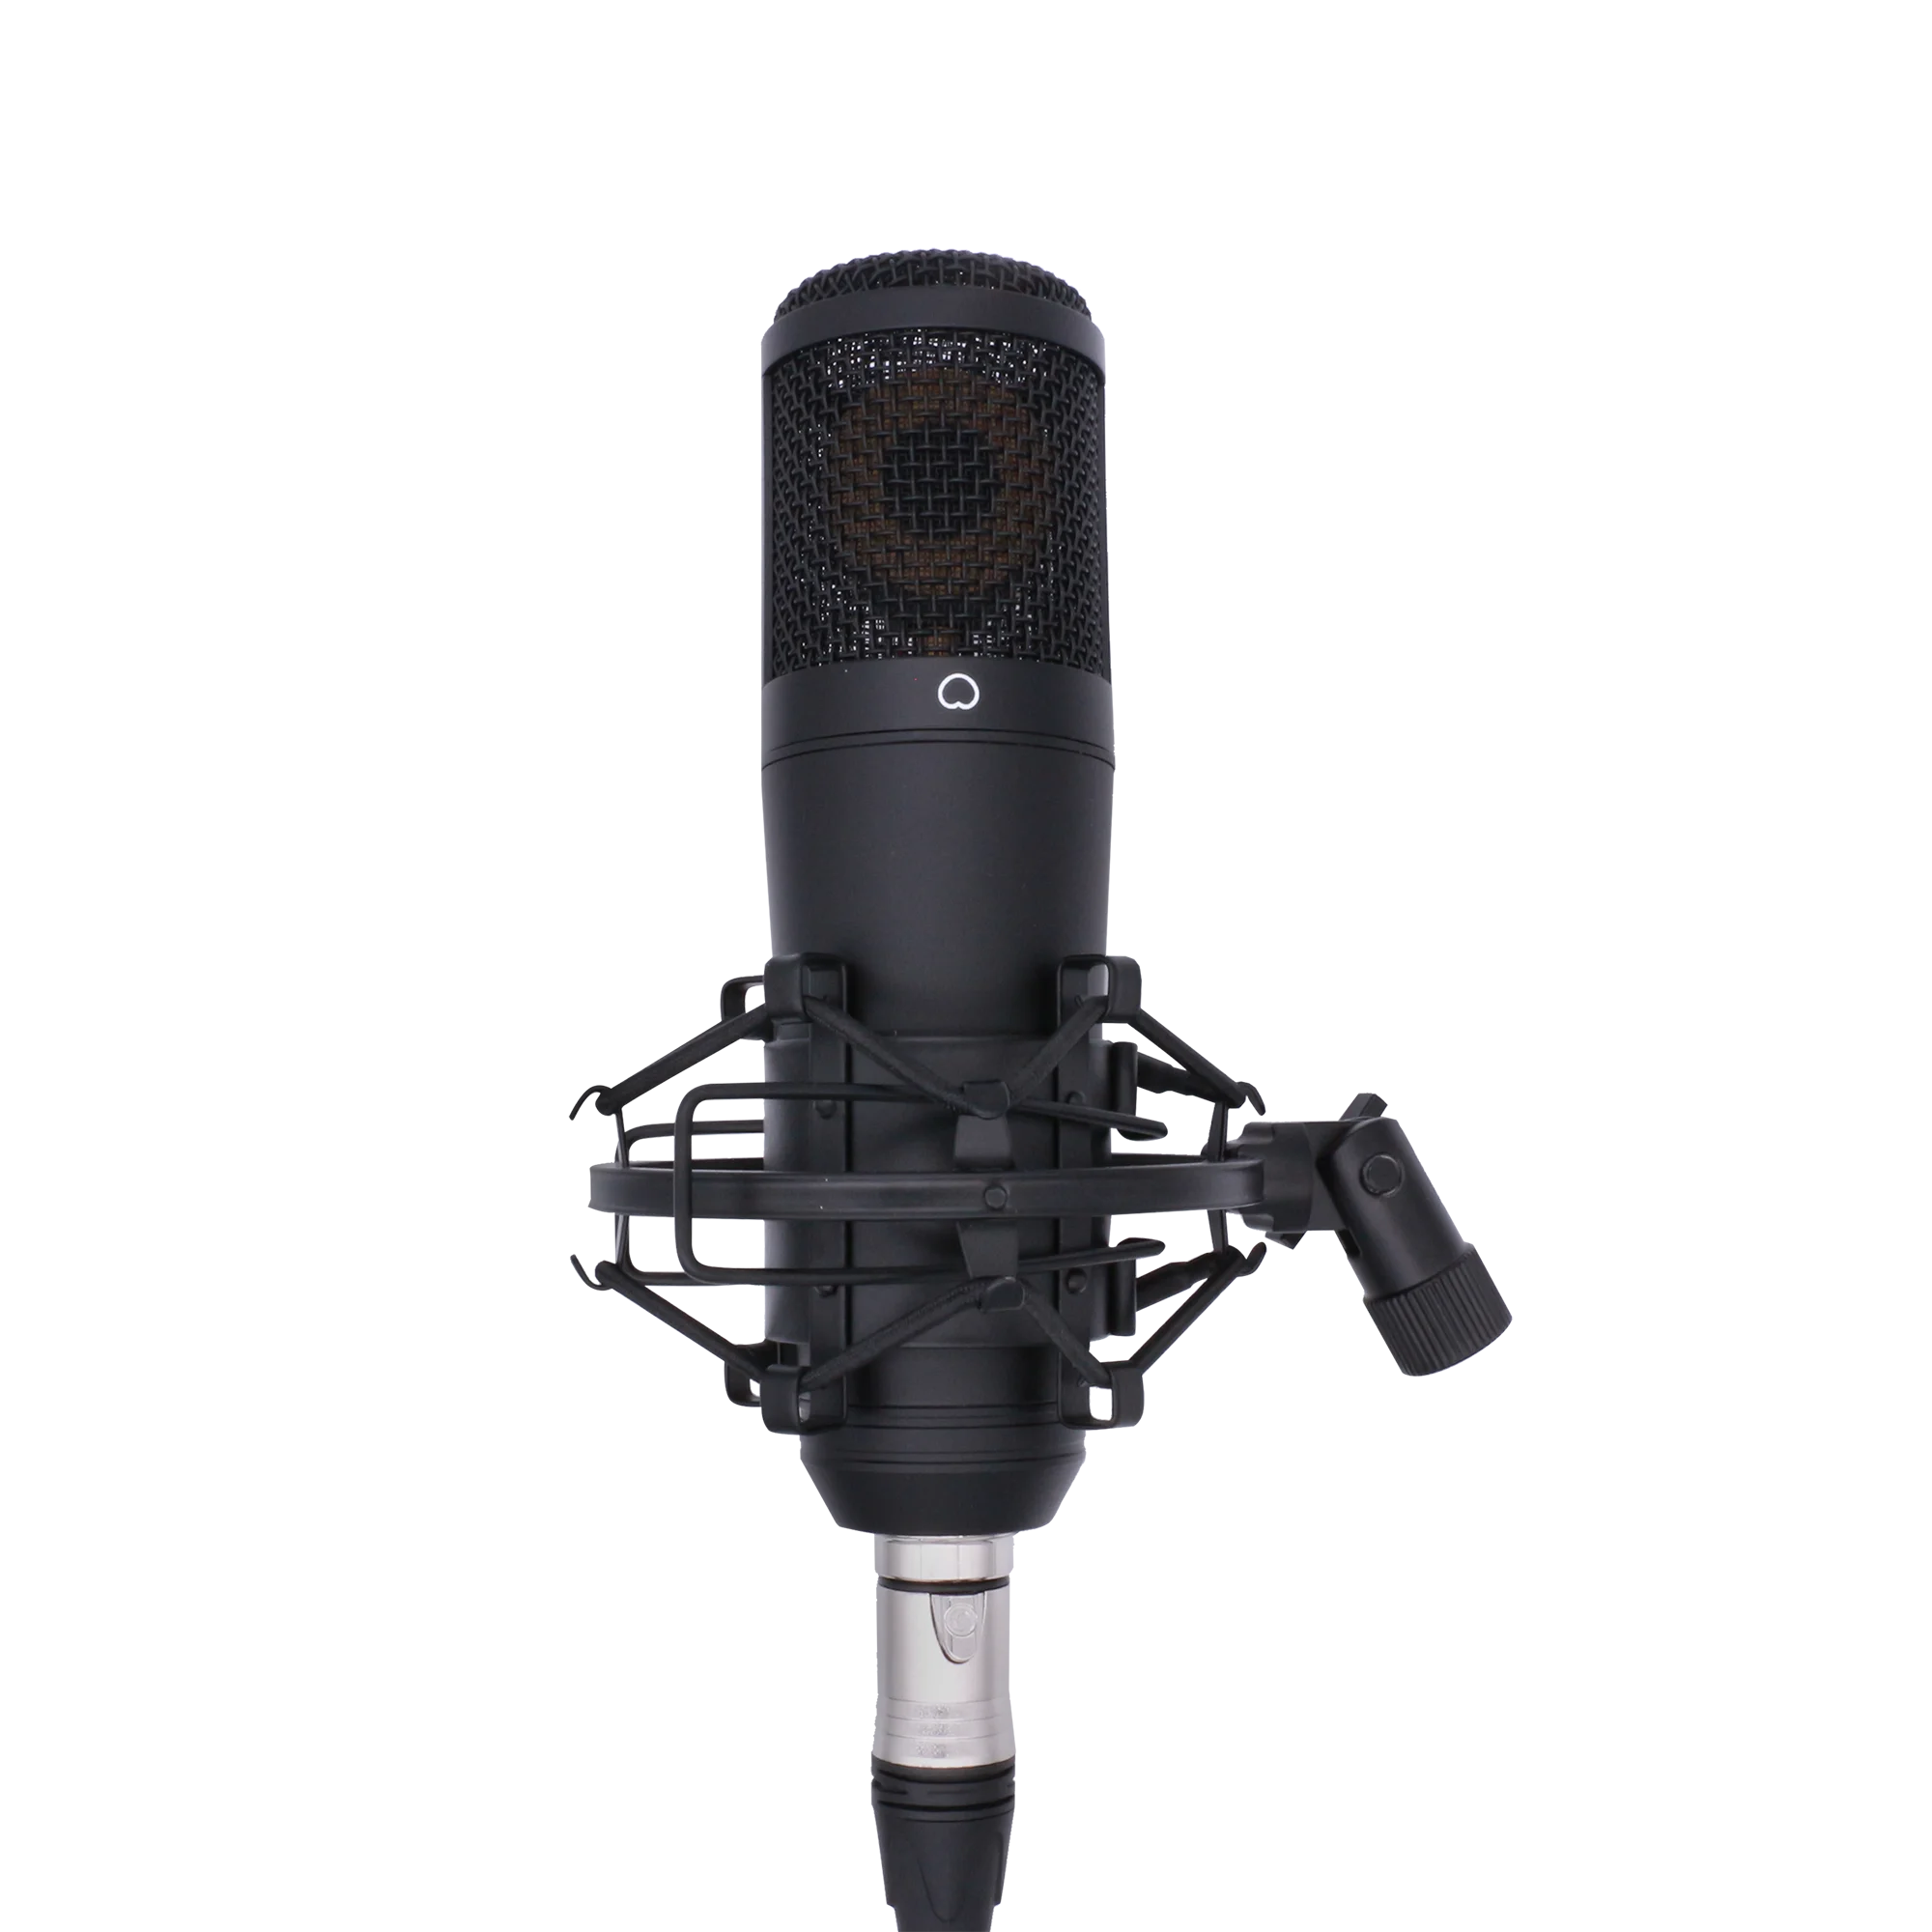 

Accuracy Stands EM-1300 Hot sale New Design Podcast XLR Mic Professional Studio Recording Condenser Microphone, Black